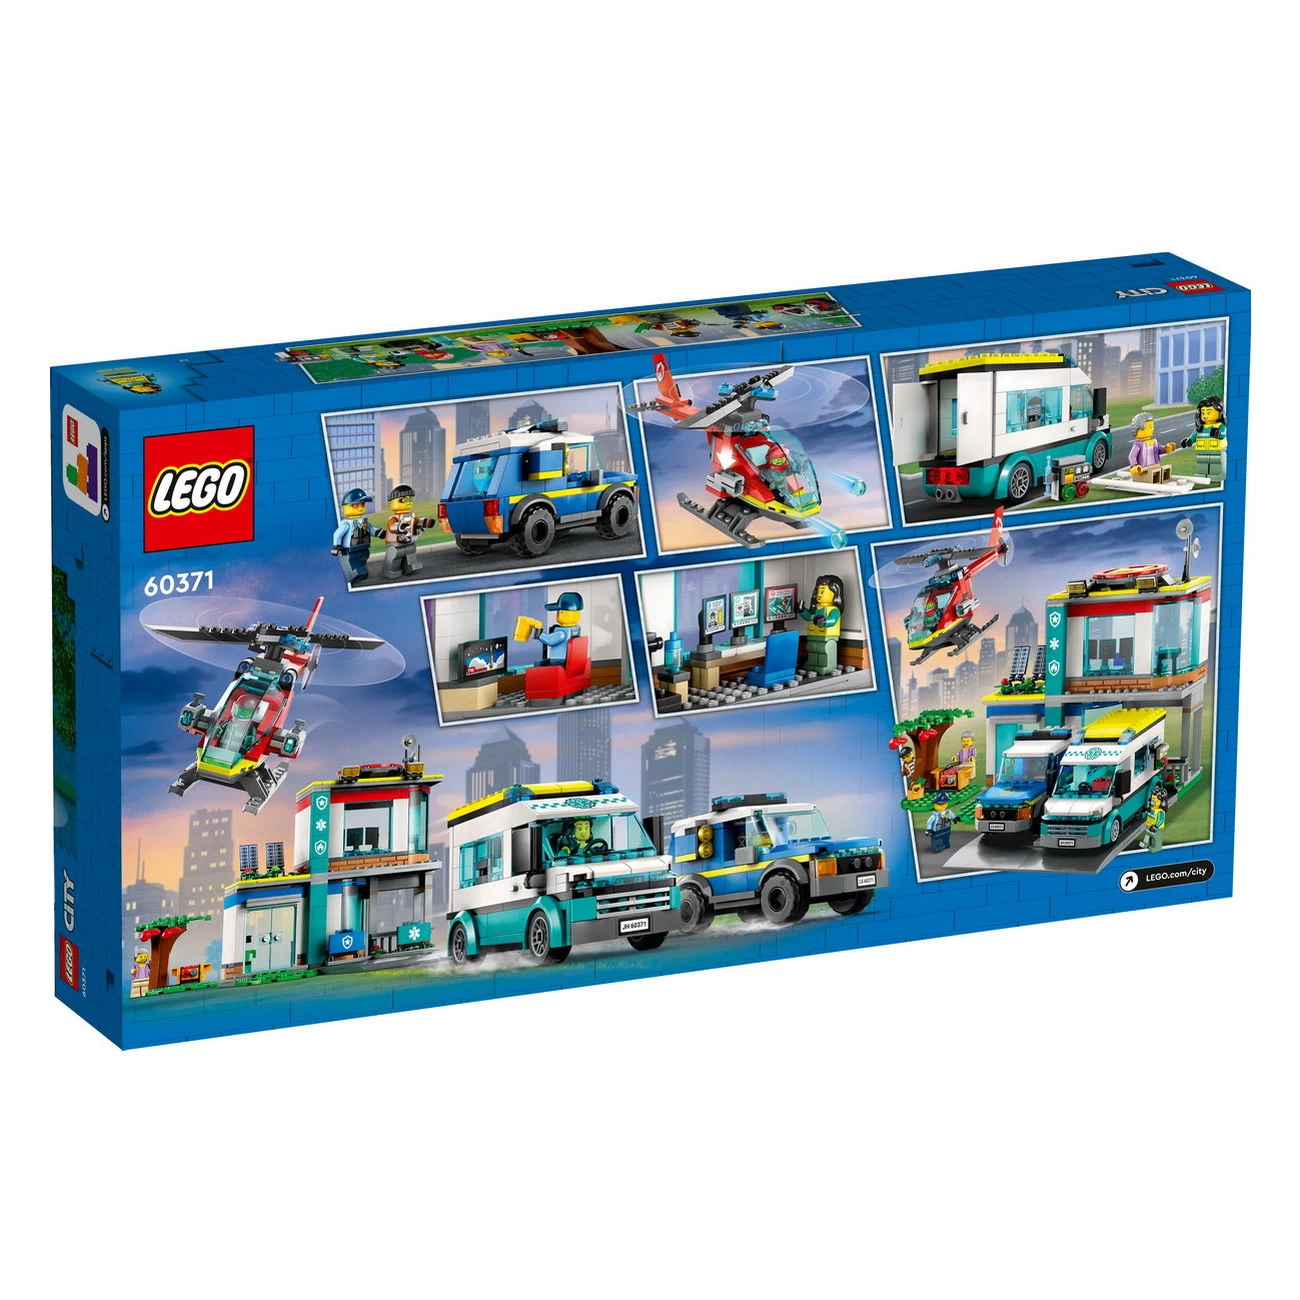 LEGO City 60371 - Hauptquartier der Rettungsfahrzeuge